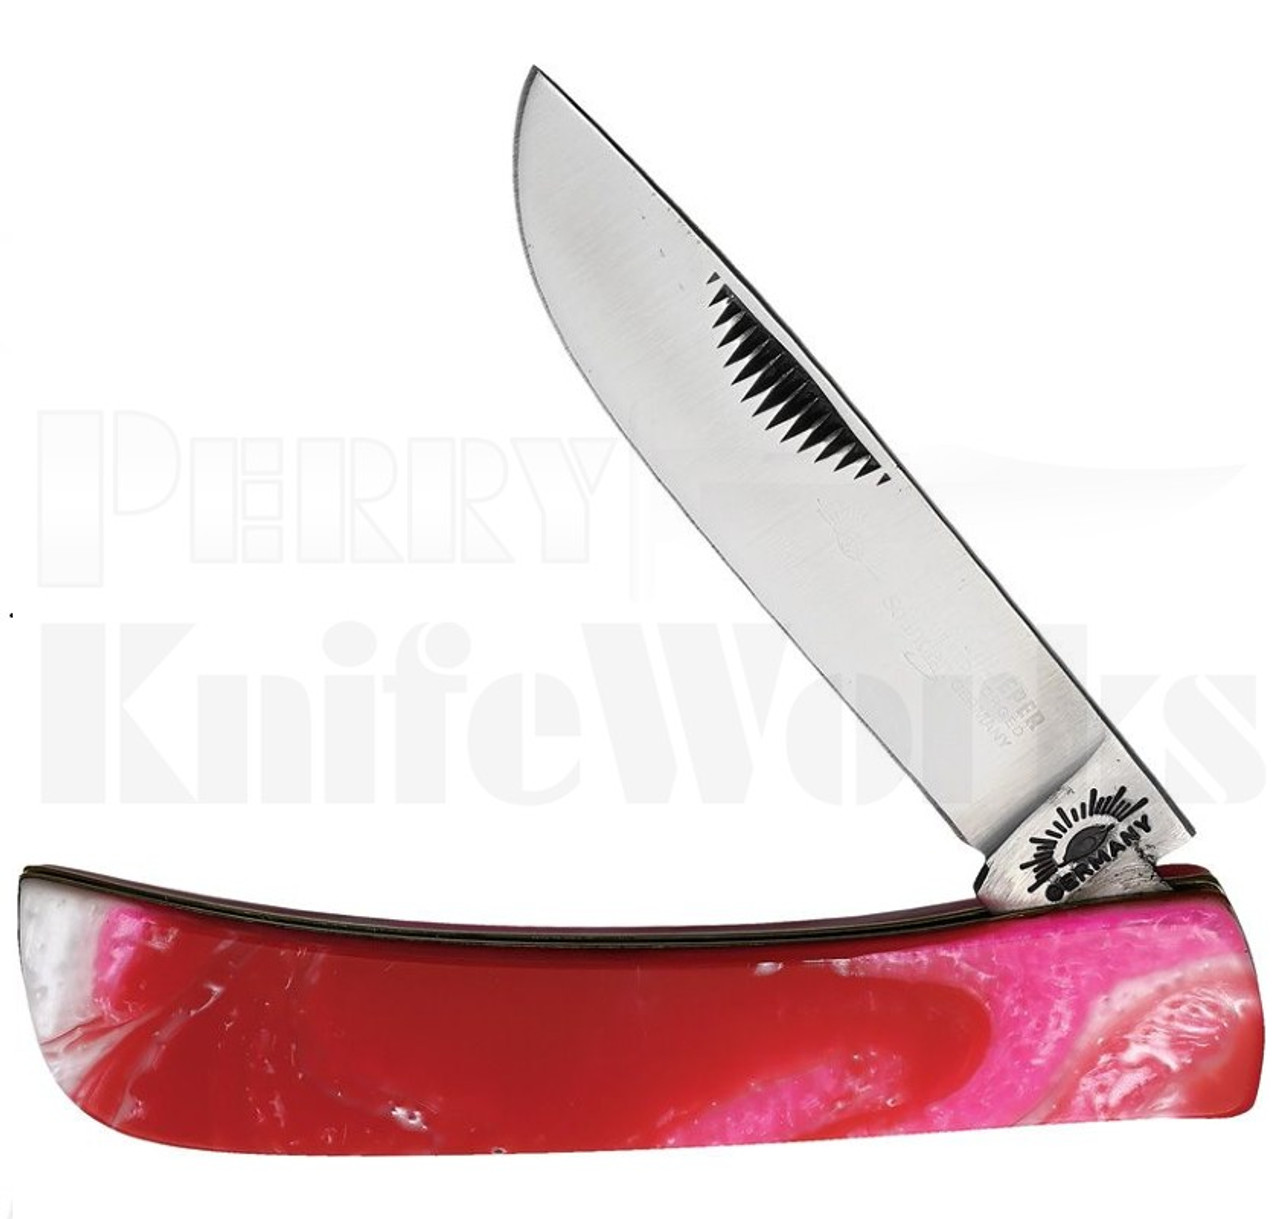 German Eye Brand Limited Clodbuster Jr Slip Joint Knife Red Wave l For Sale